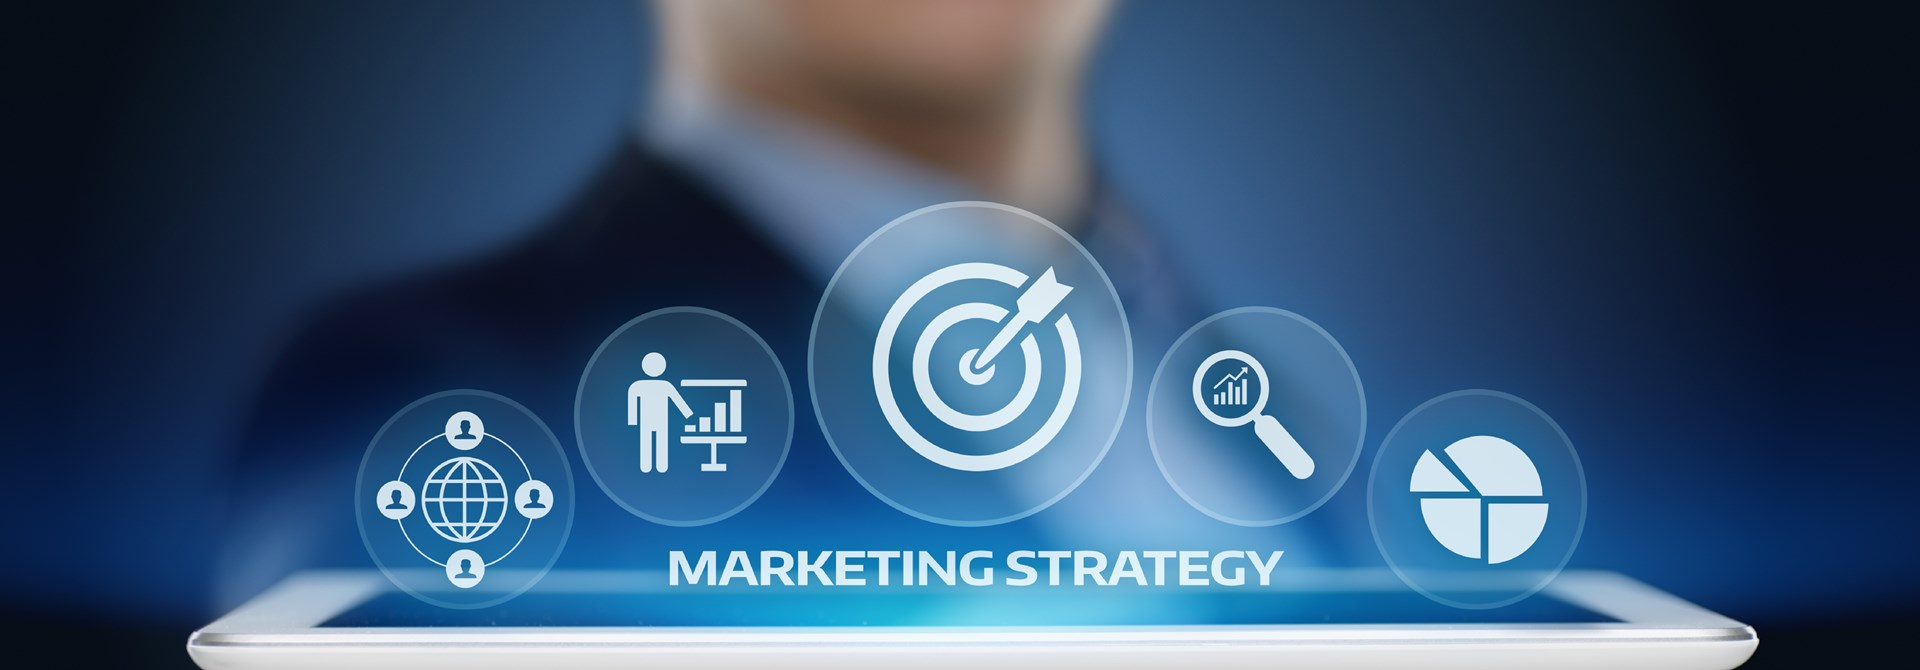 Marketingstrategy